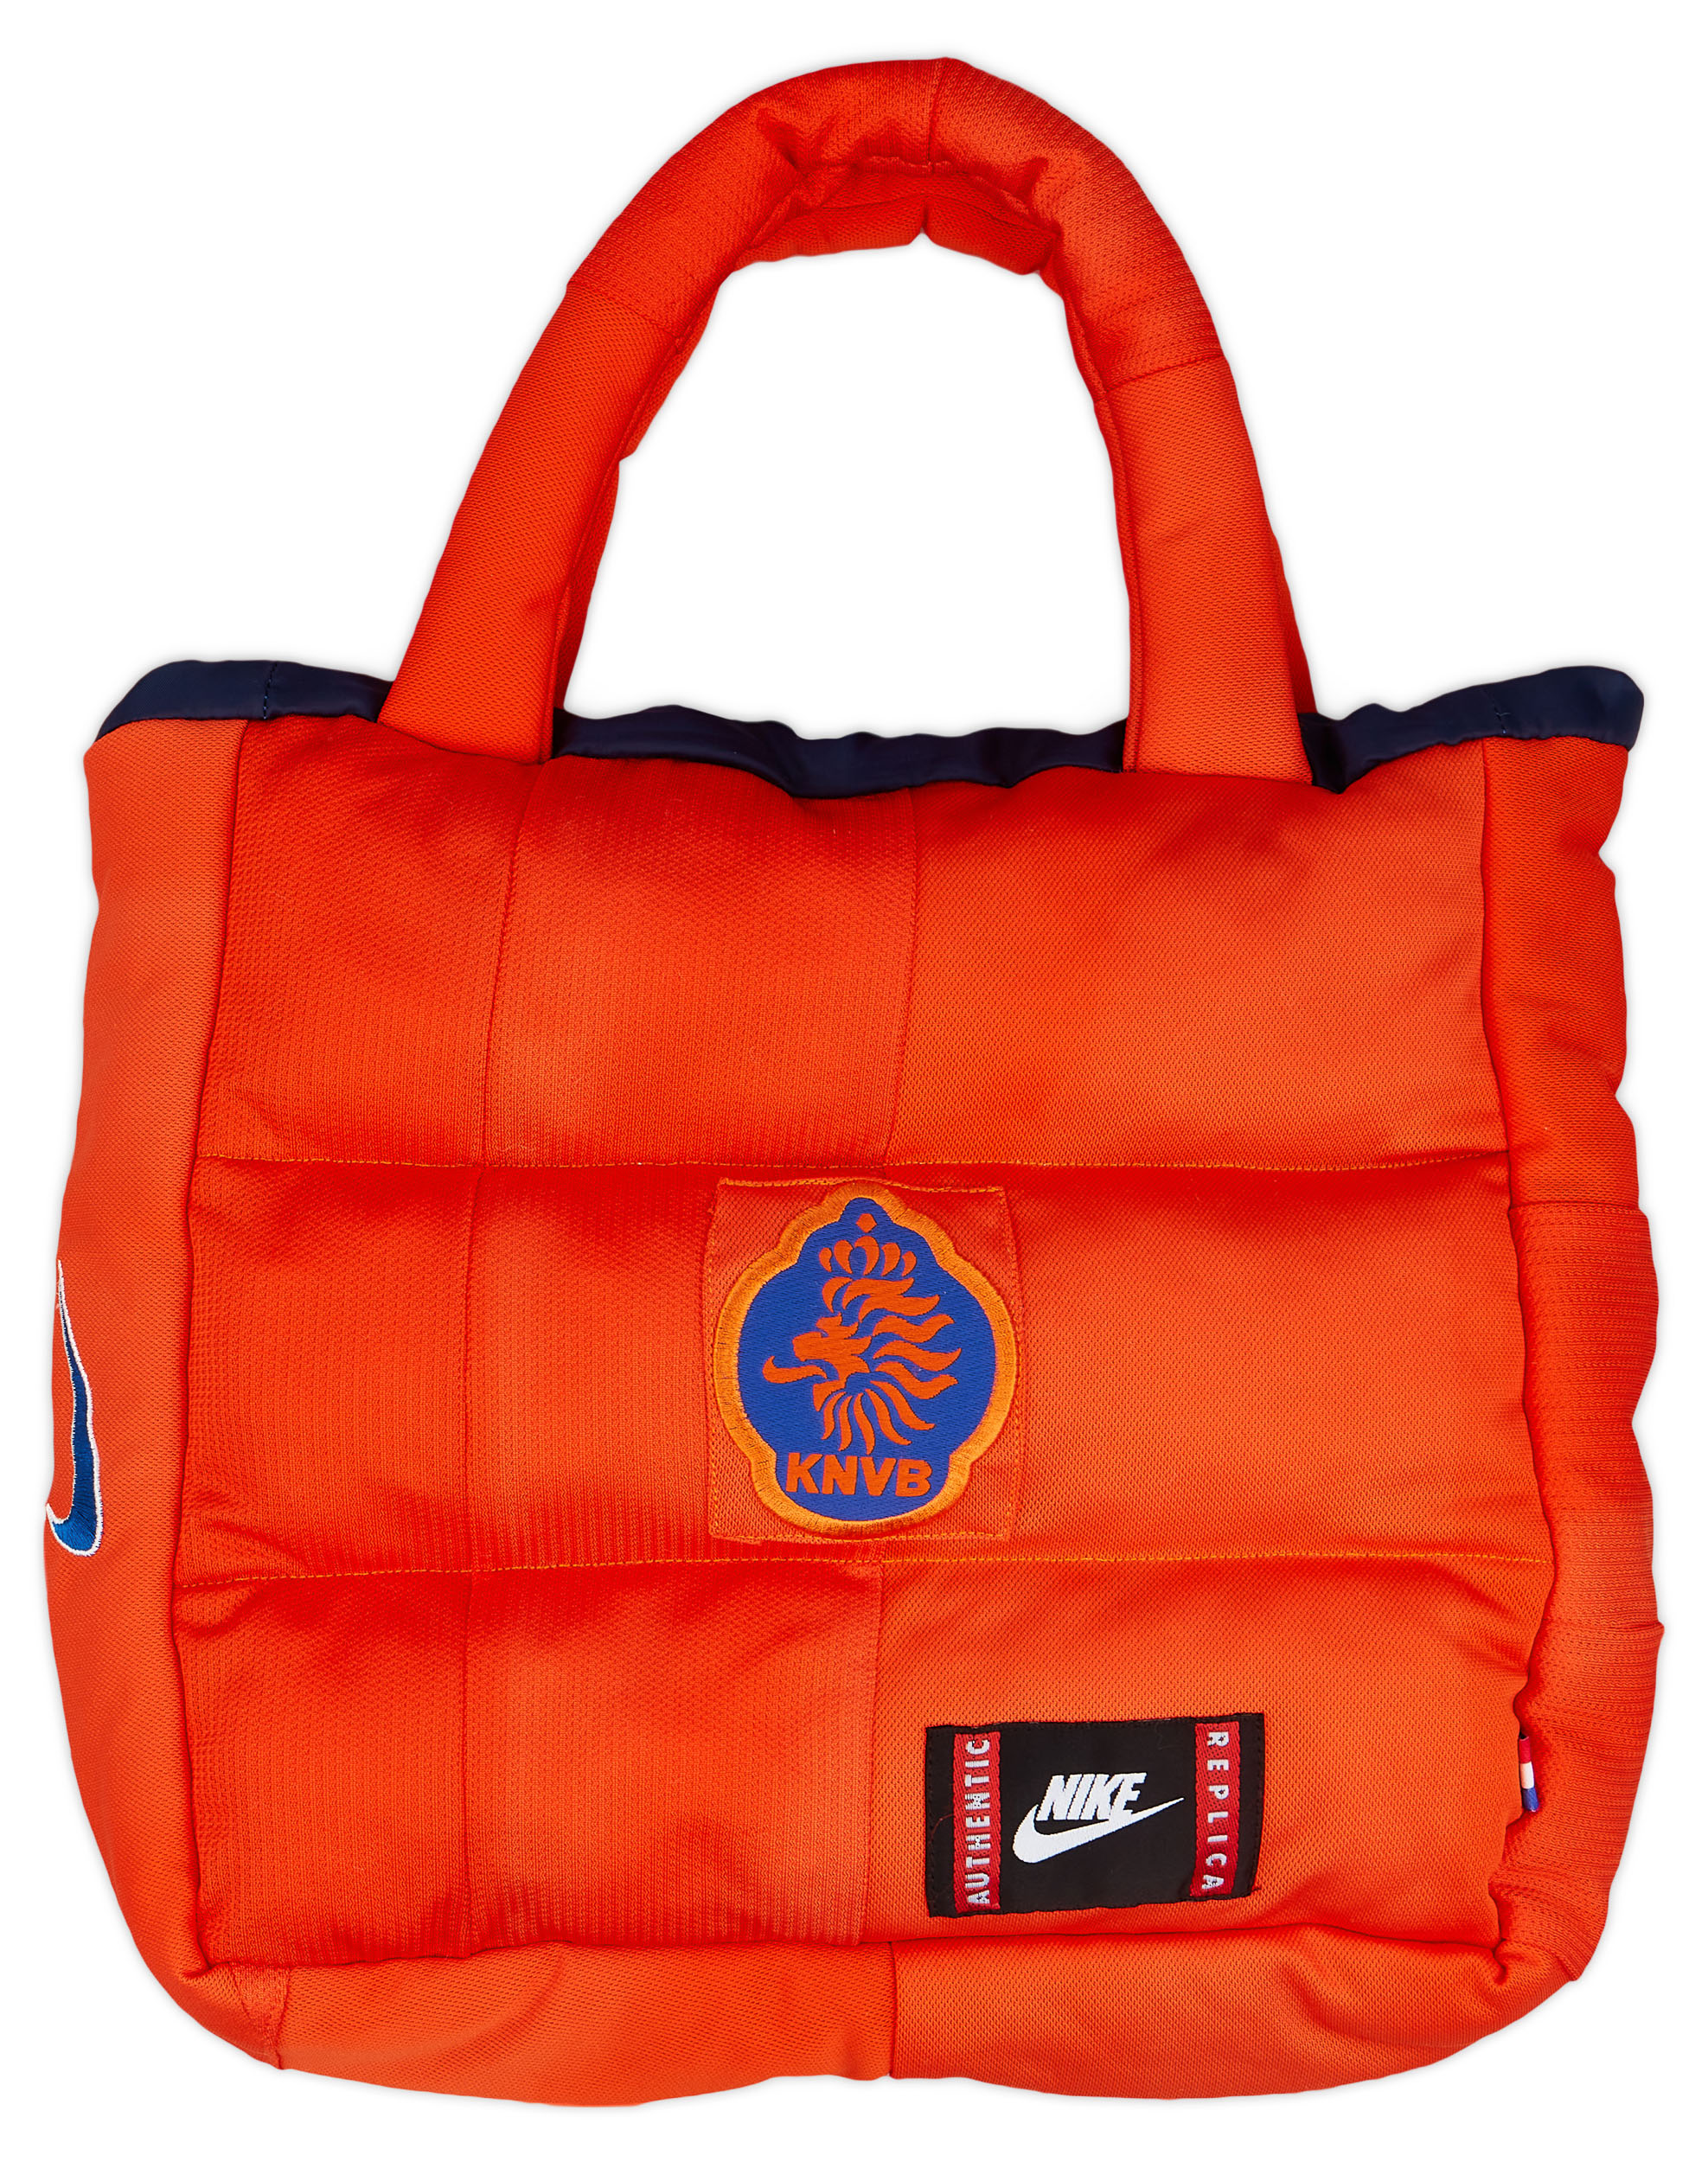 Reworked Holland Puffer Bag